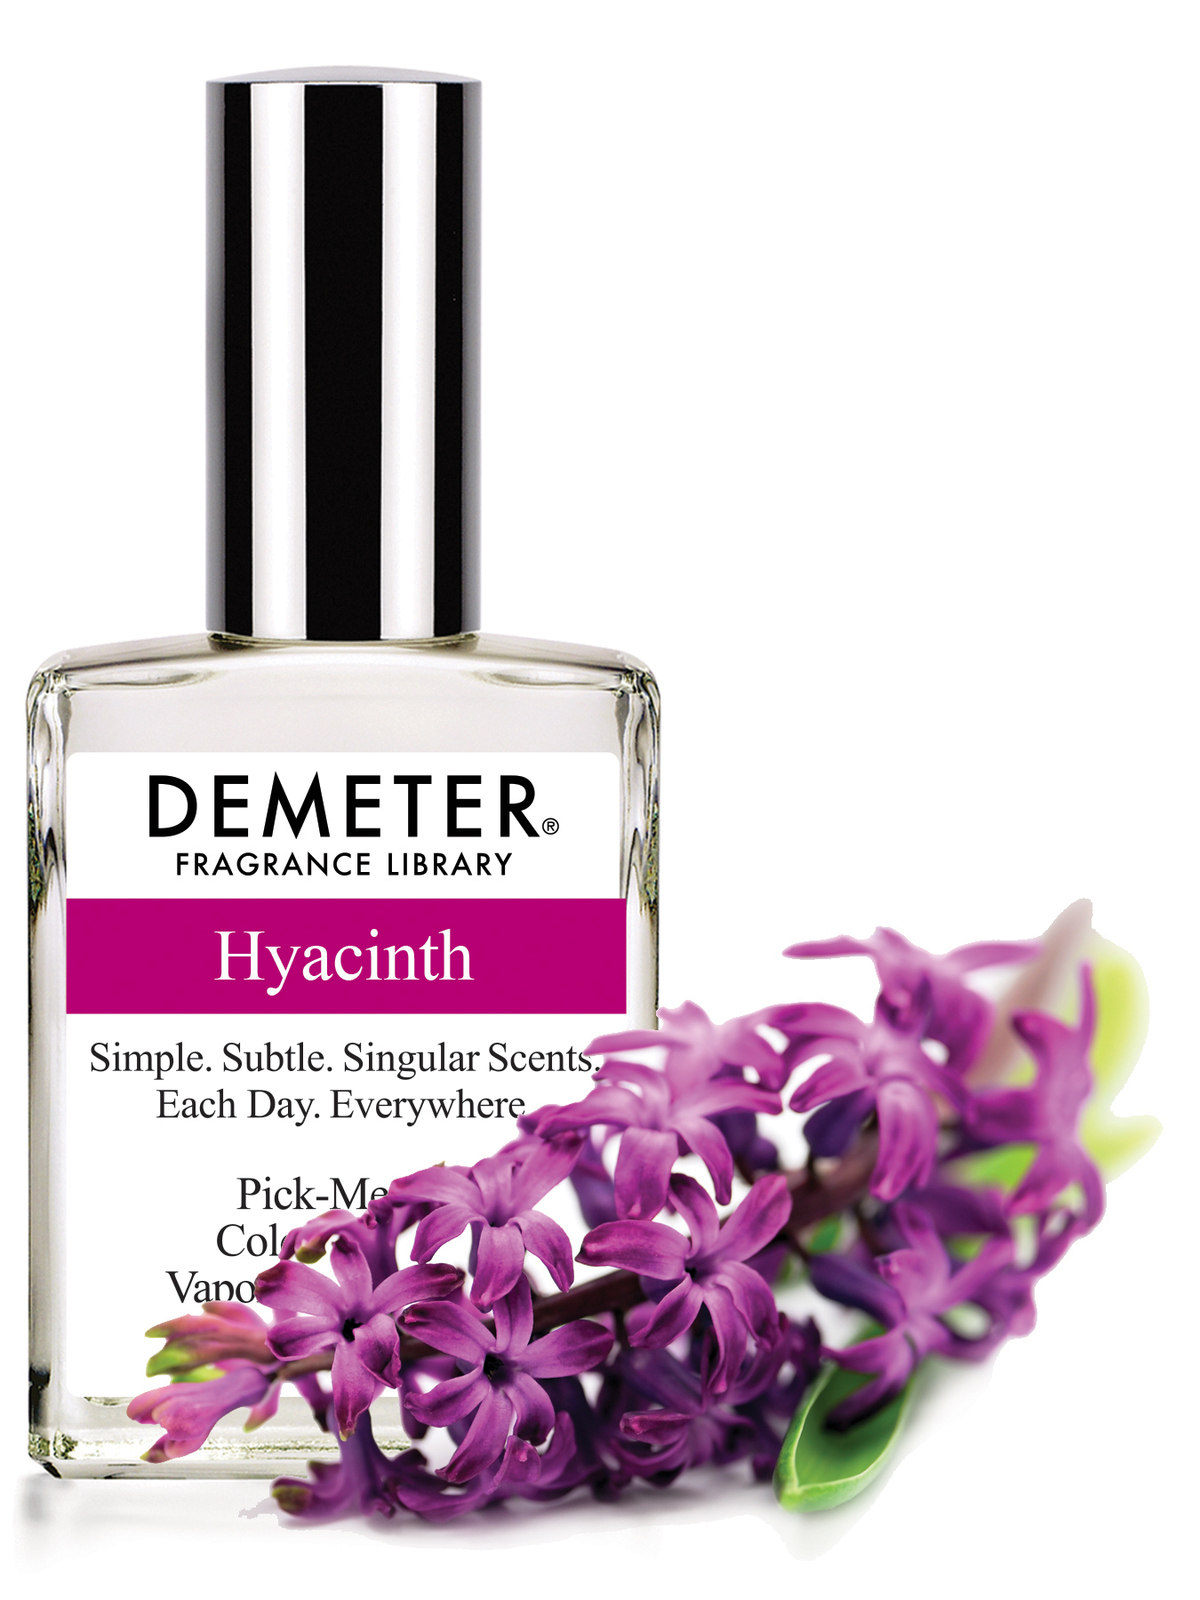 Hyacinth Cologne Spray - Demeter Fragrance Library